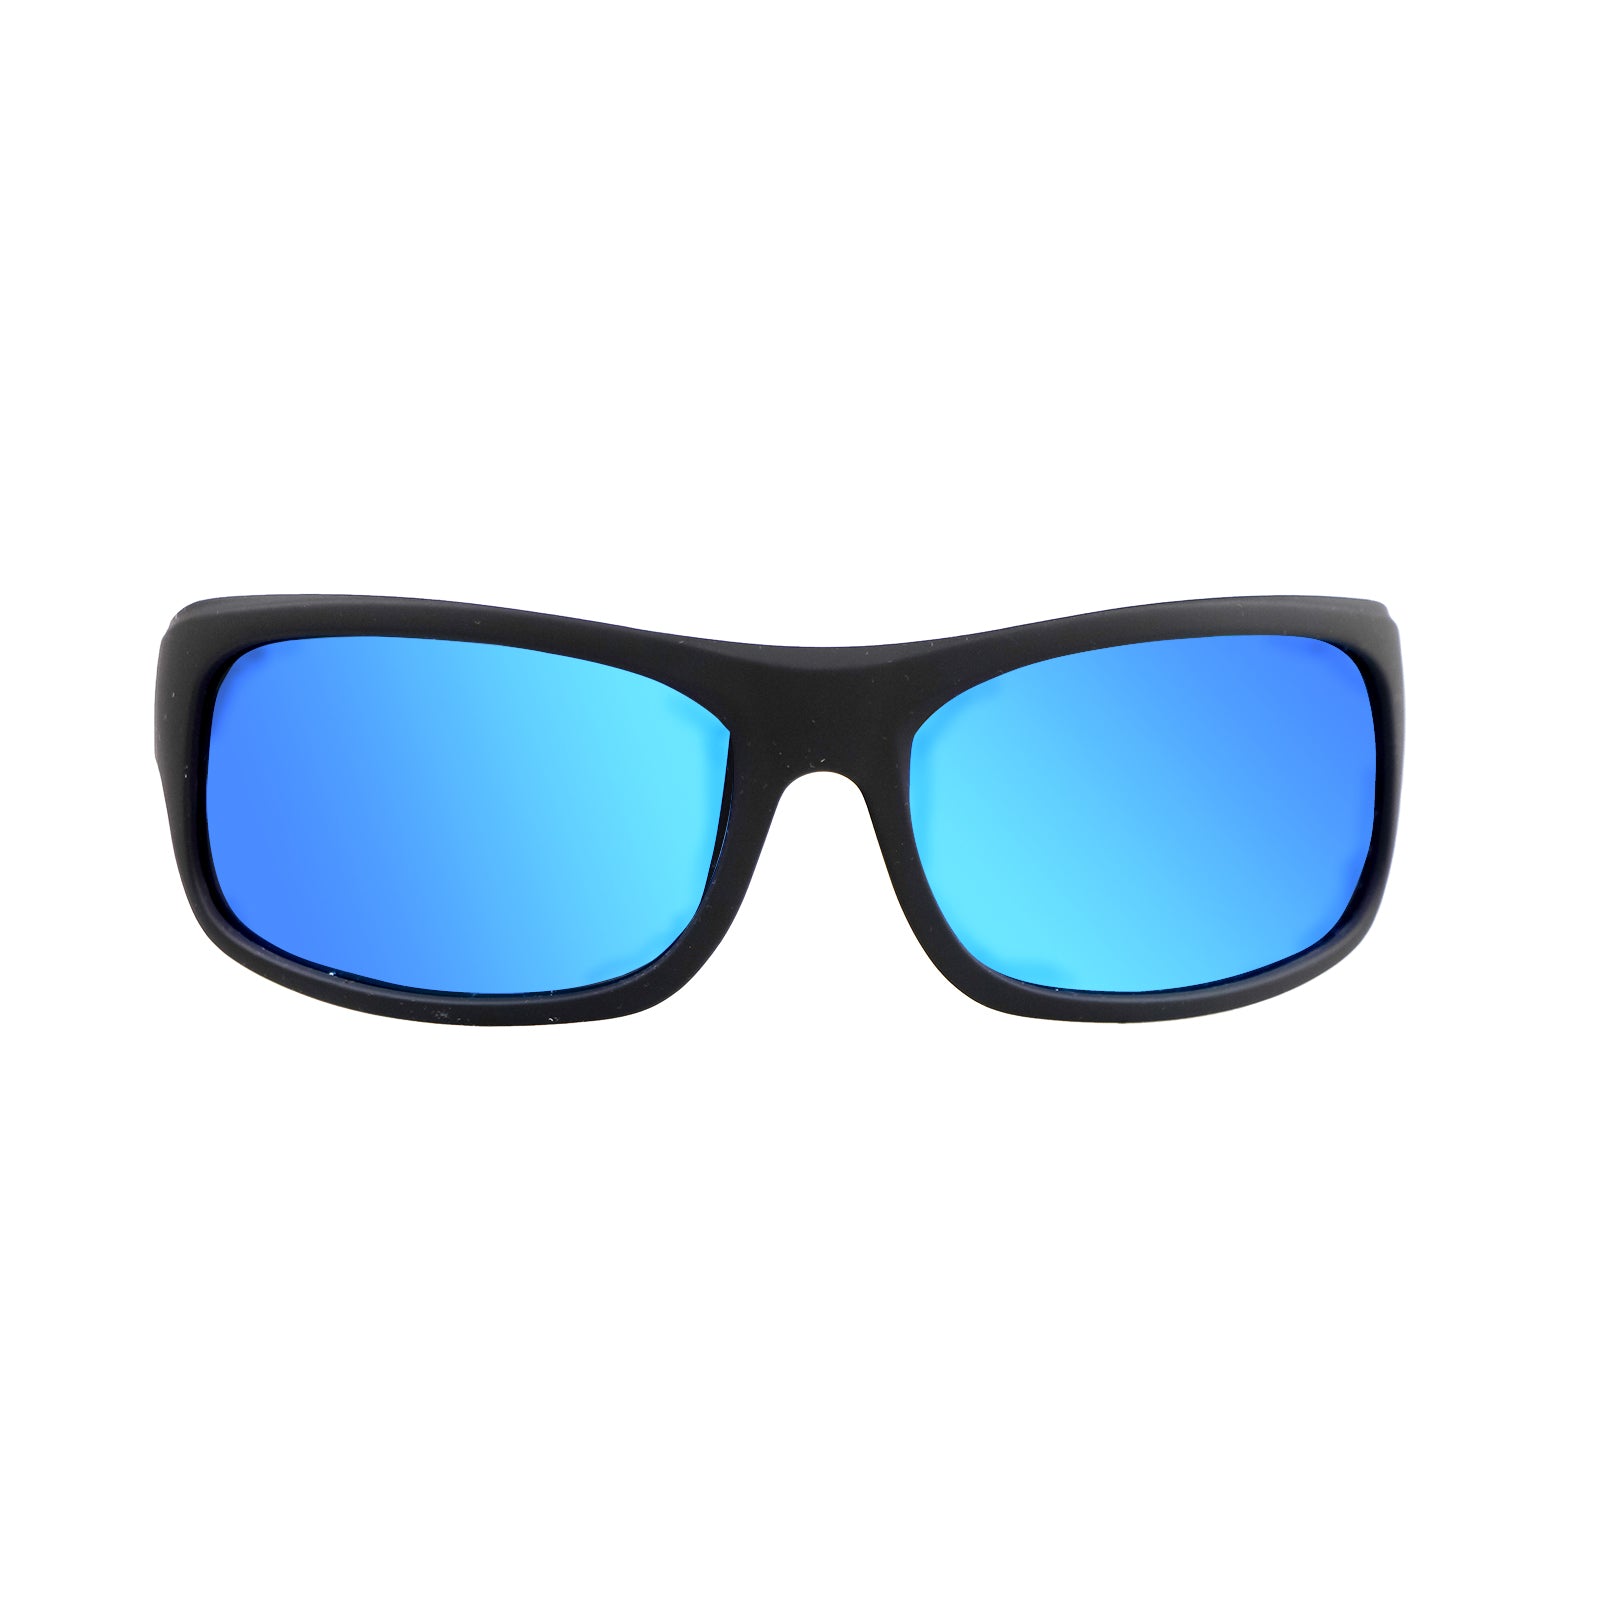 Sonnenbrille Erebos Extra Dunkel Kategorie 4 , L Blau verspiegelt